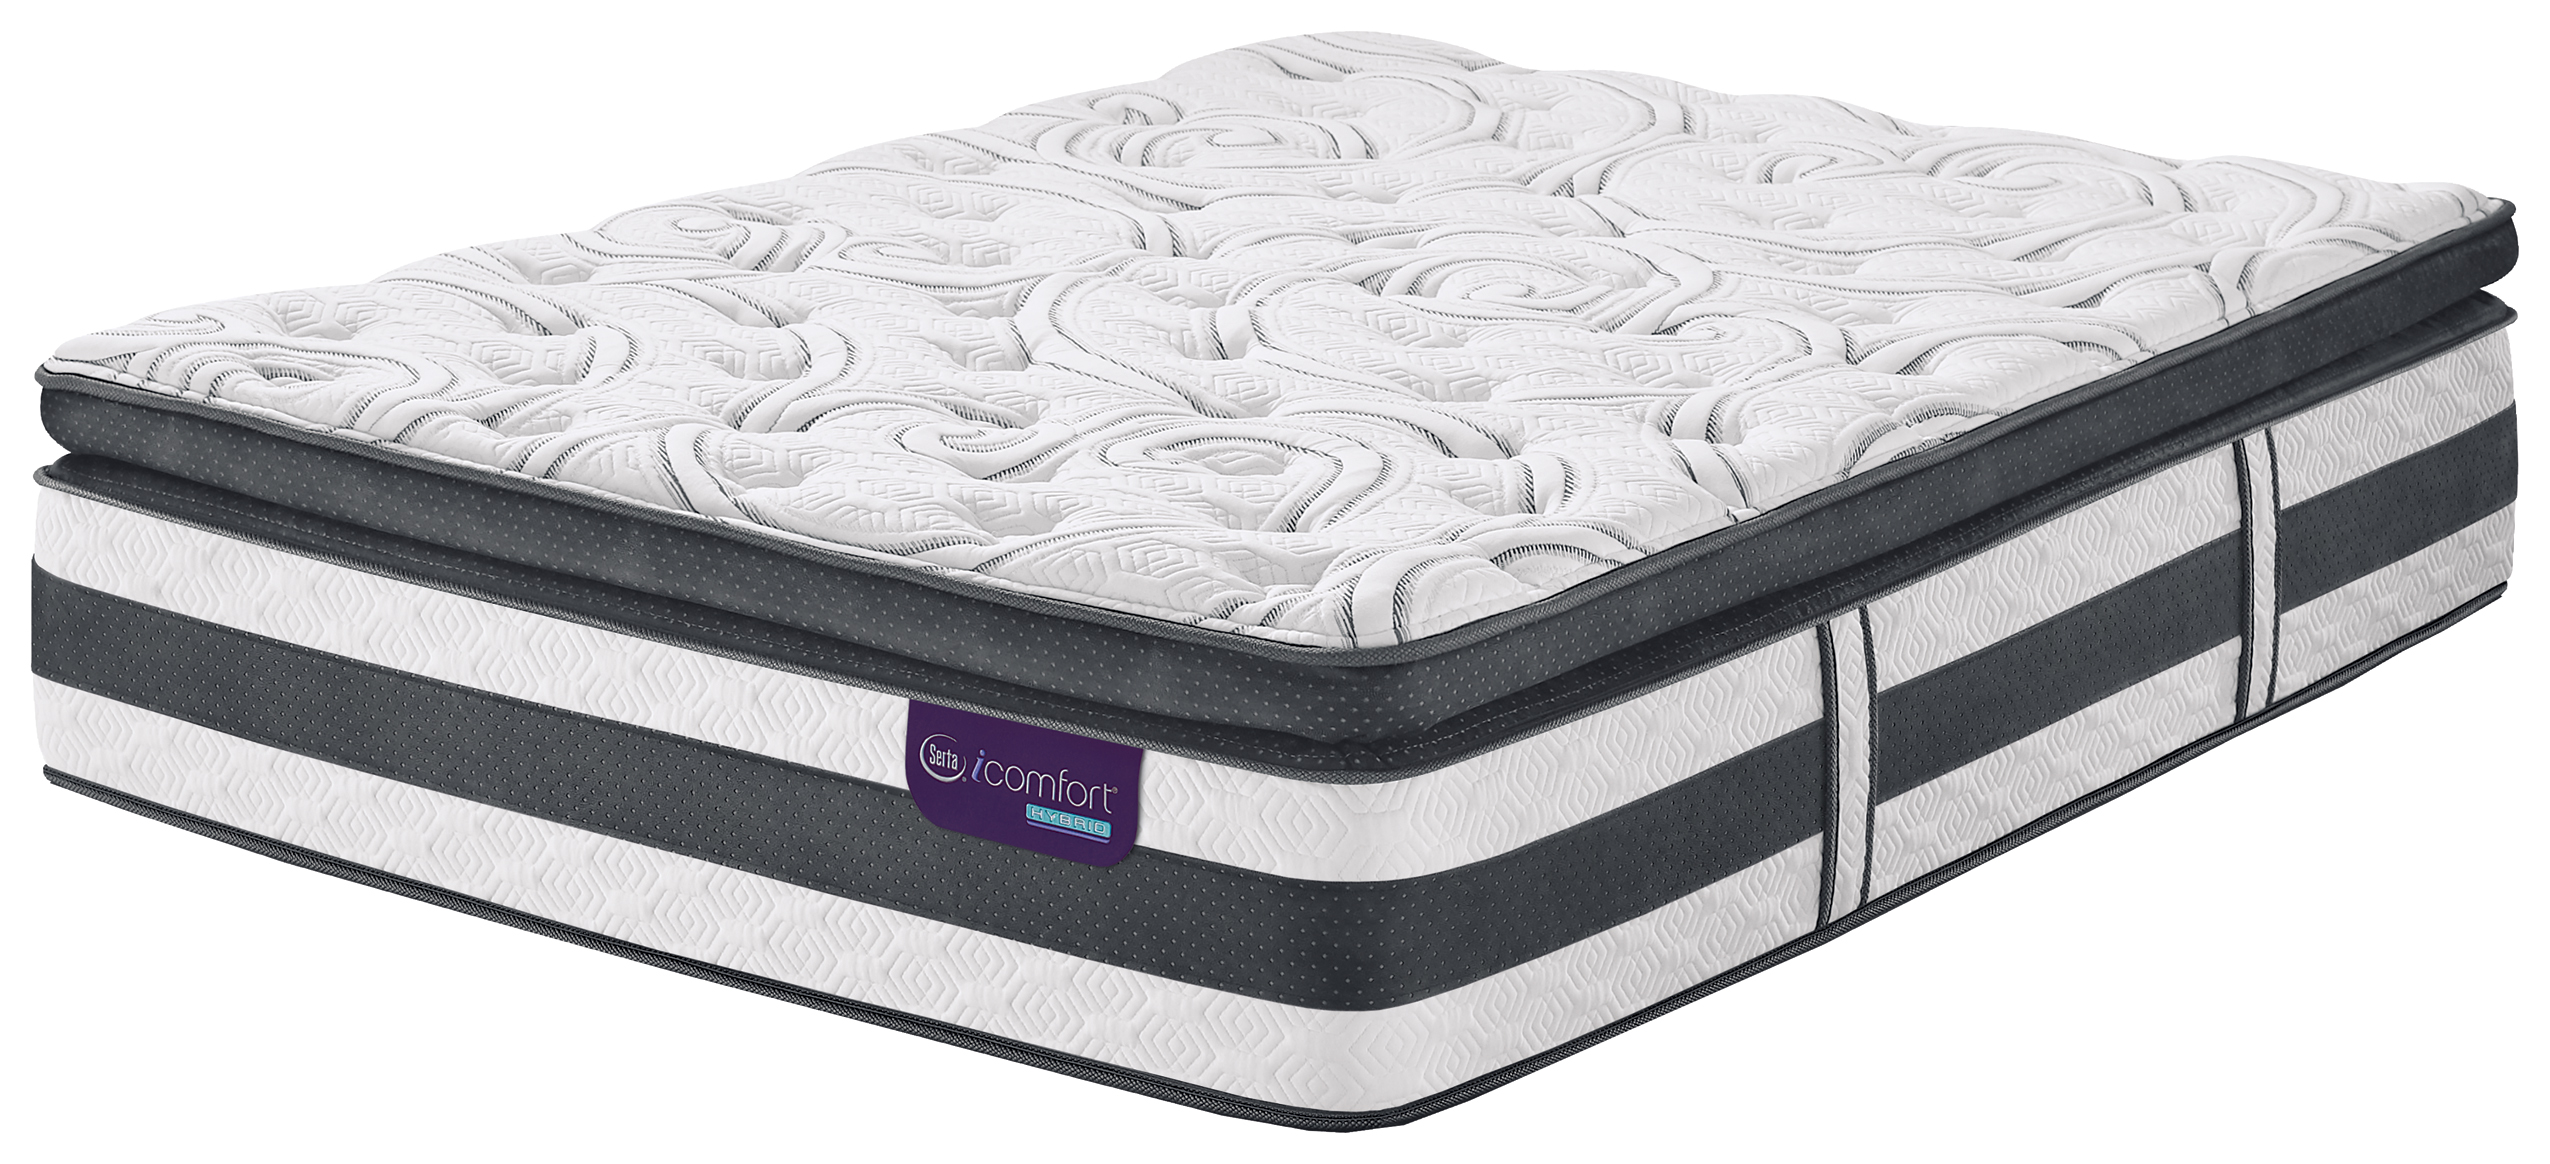 serta-icomfort-hybrid-Expertise-super-pillow-top-mattress-sleepworksny.com.